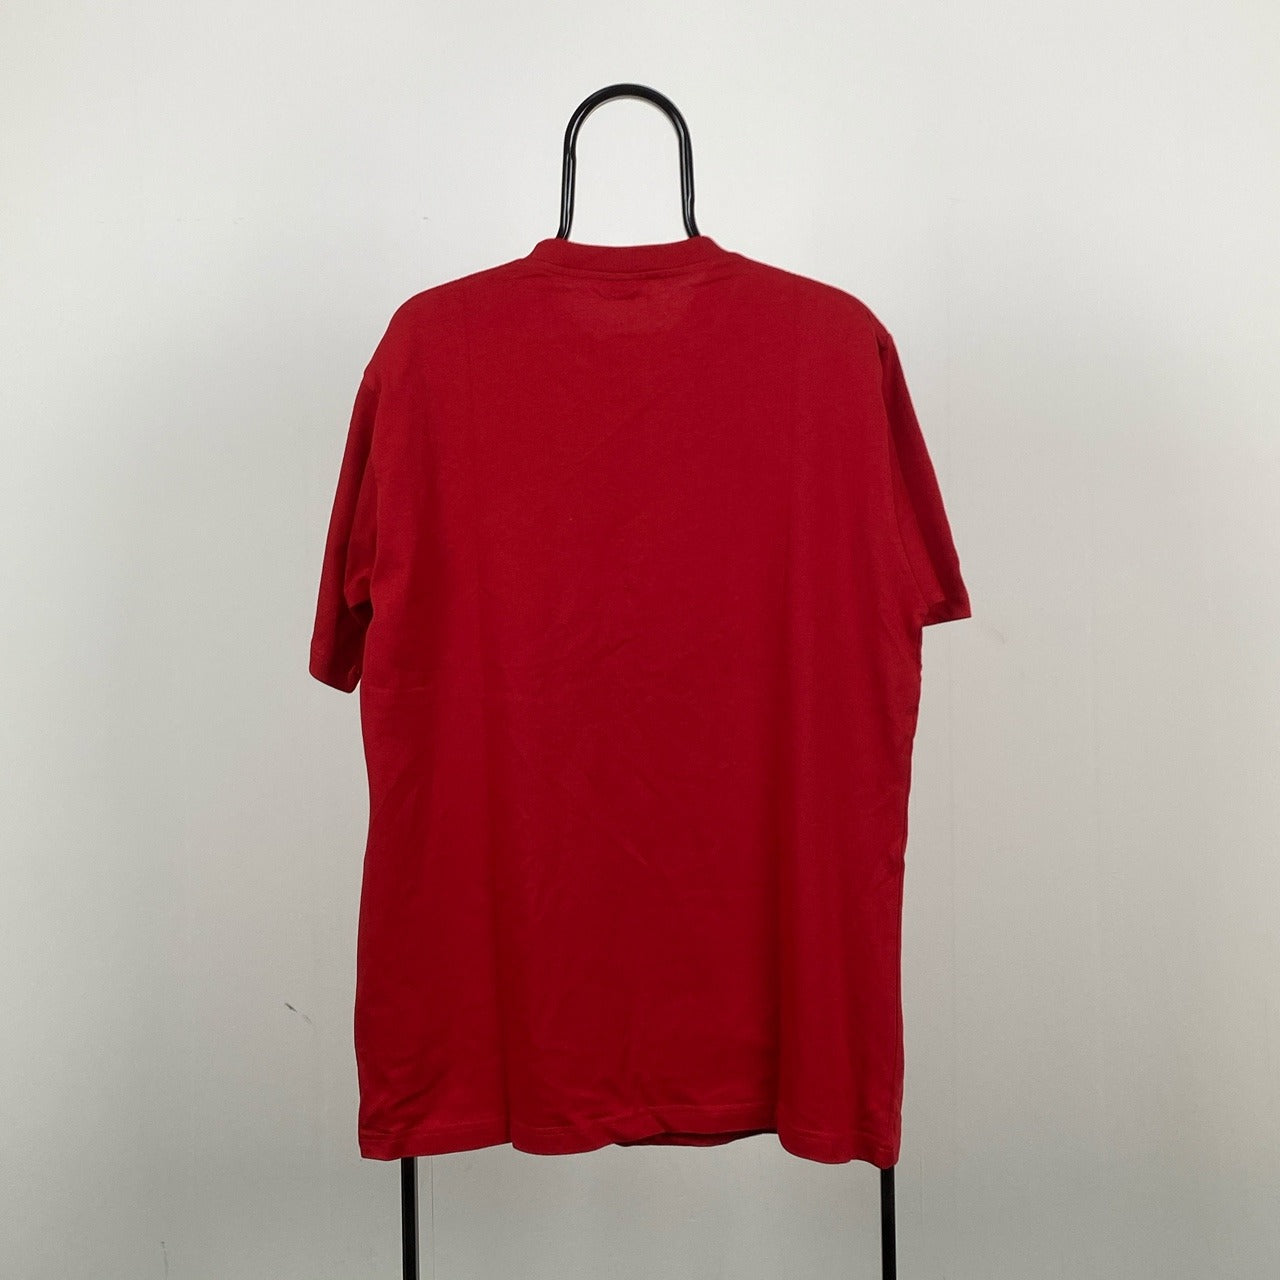 Nike Town T-Shirt Red Large